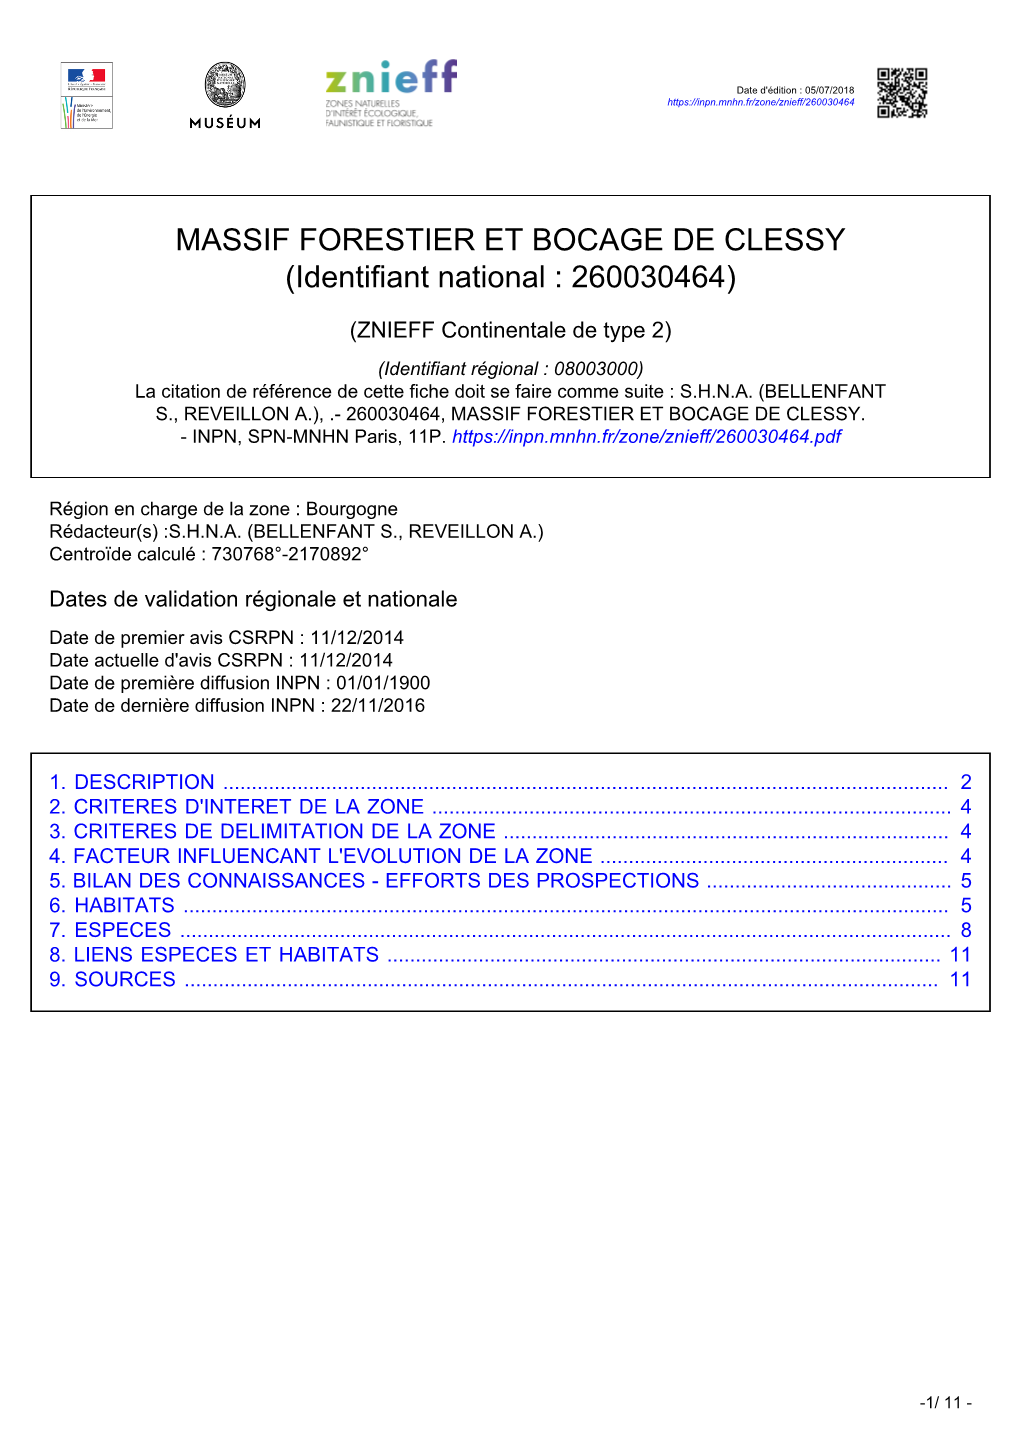 MASSIF FORESTIER ET BOCAGE DE CLESSY (Identifiant National : 260030464)